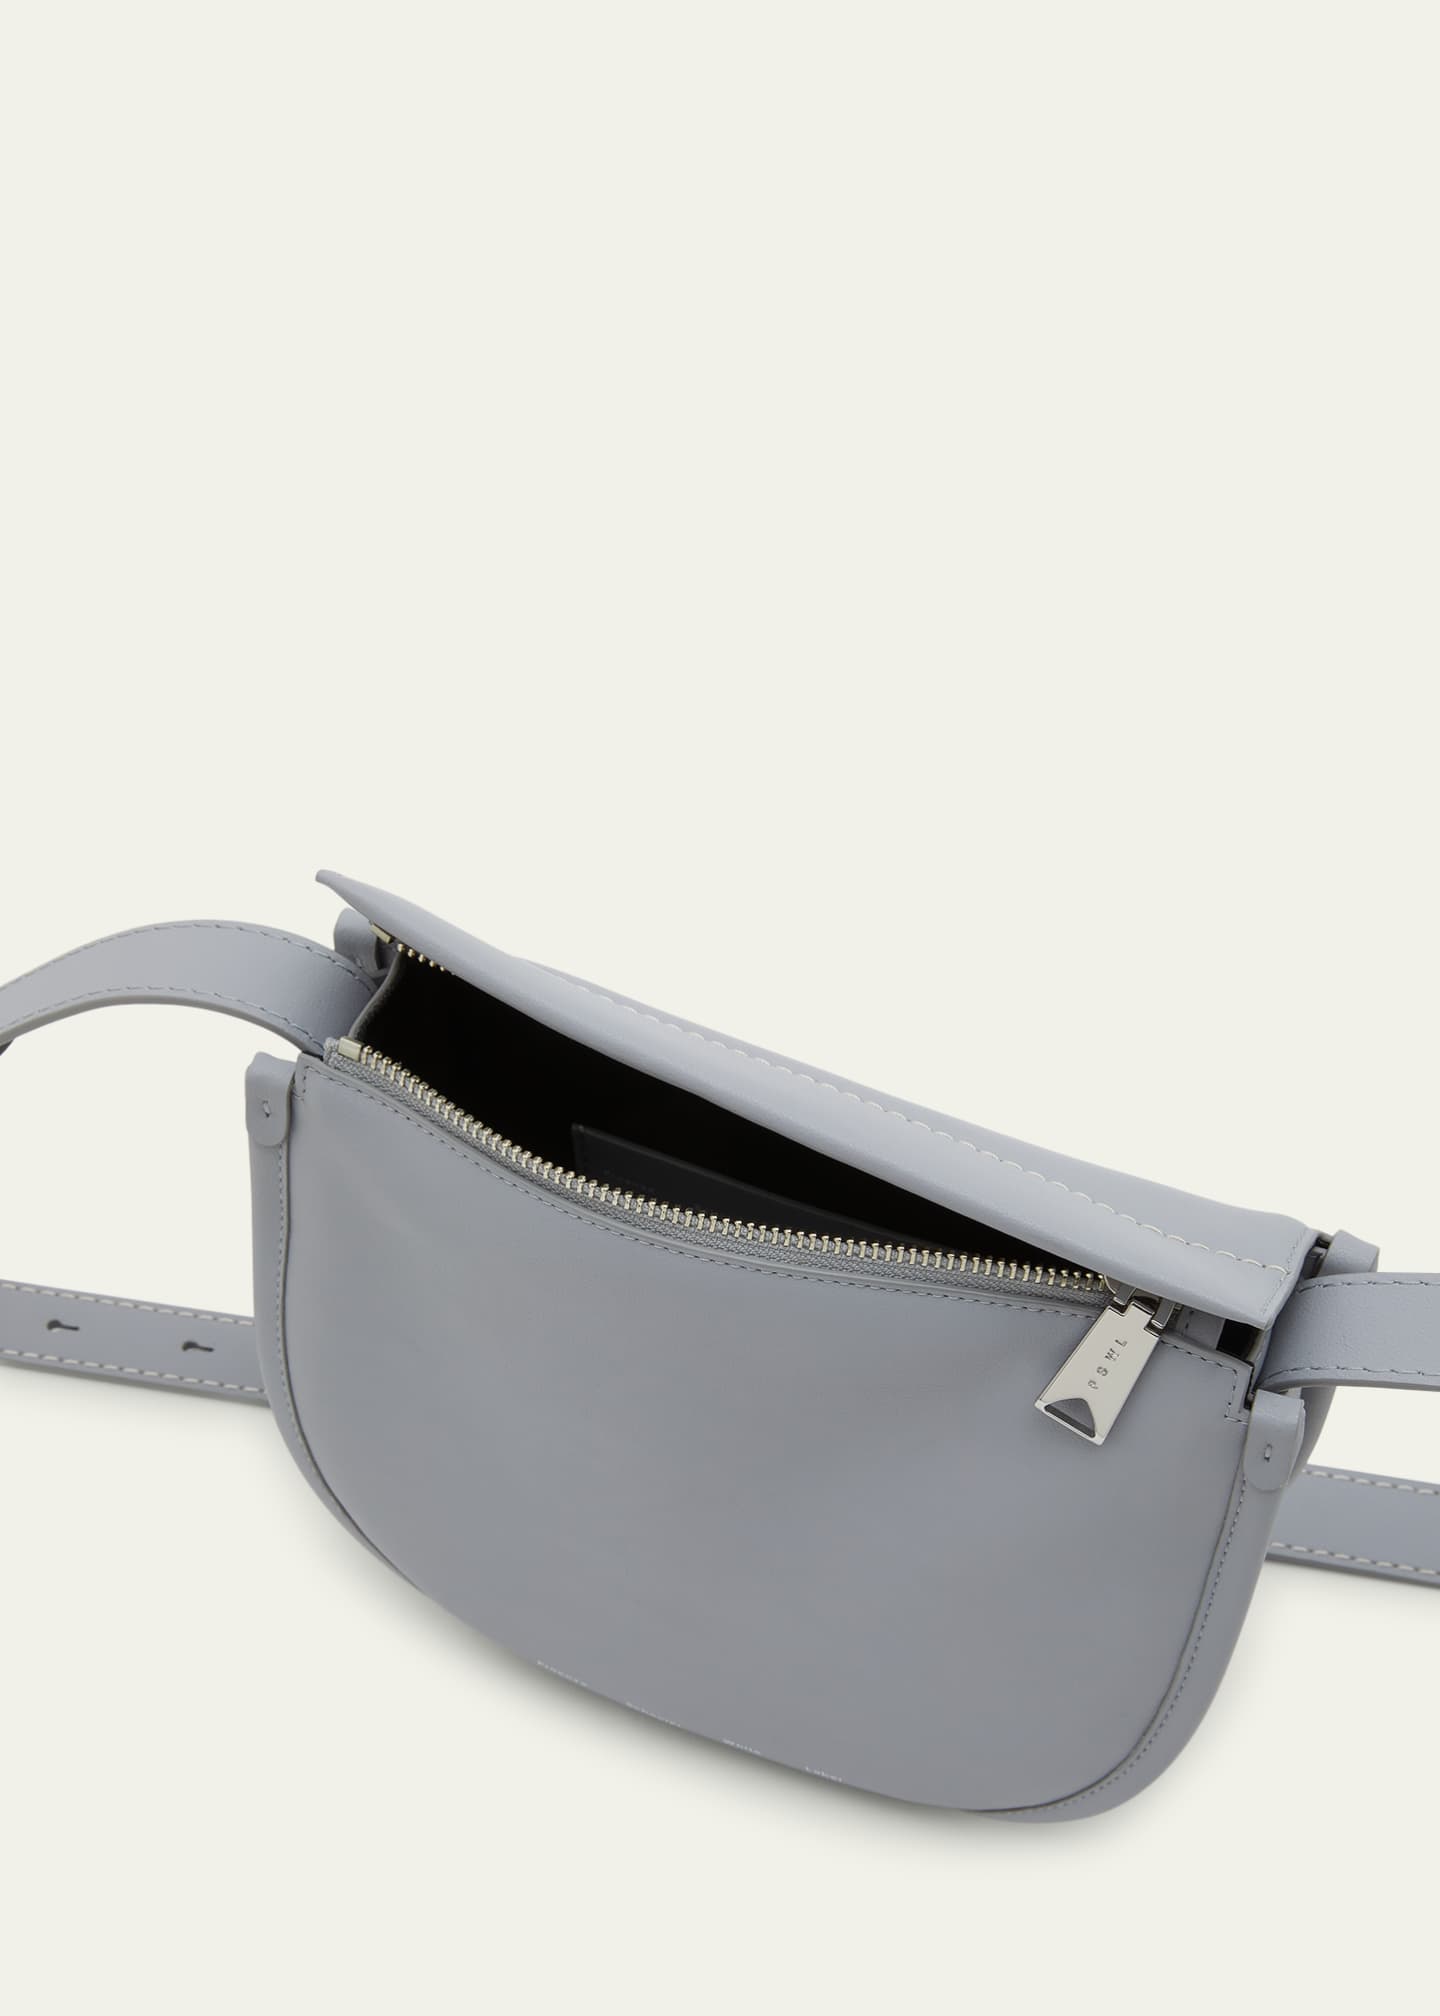 Proenza Schouler White Label small Baxter shoulder bag - Neutrals